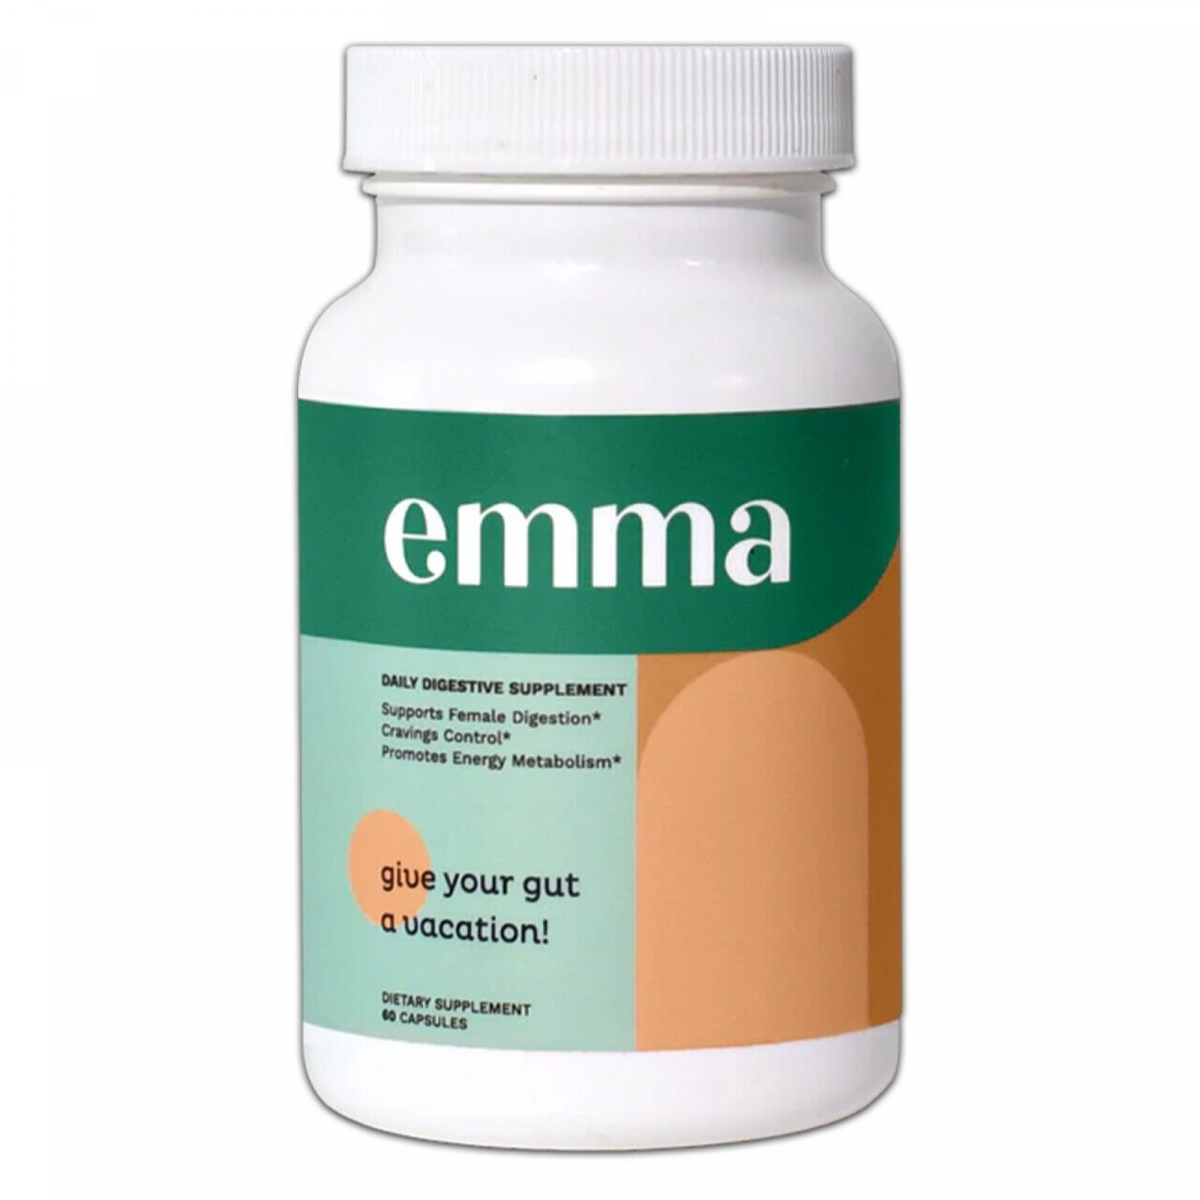 Emma for gut health